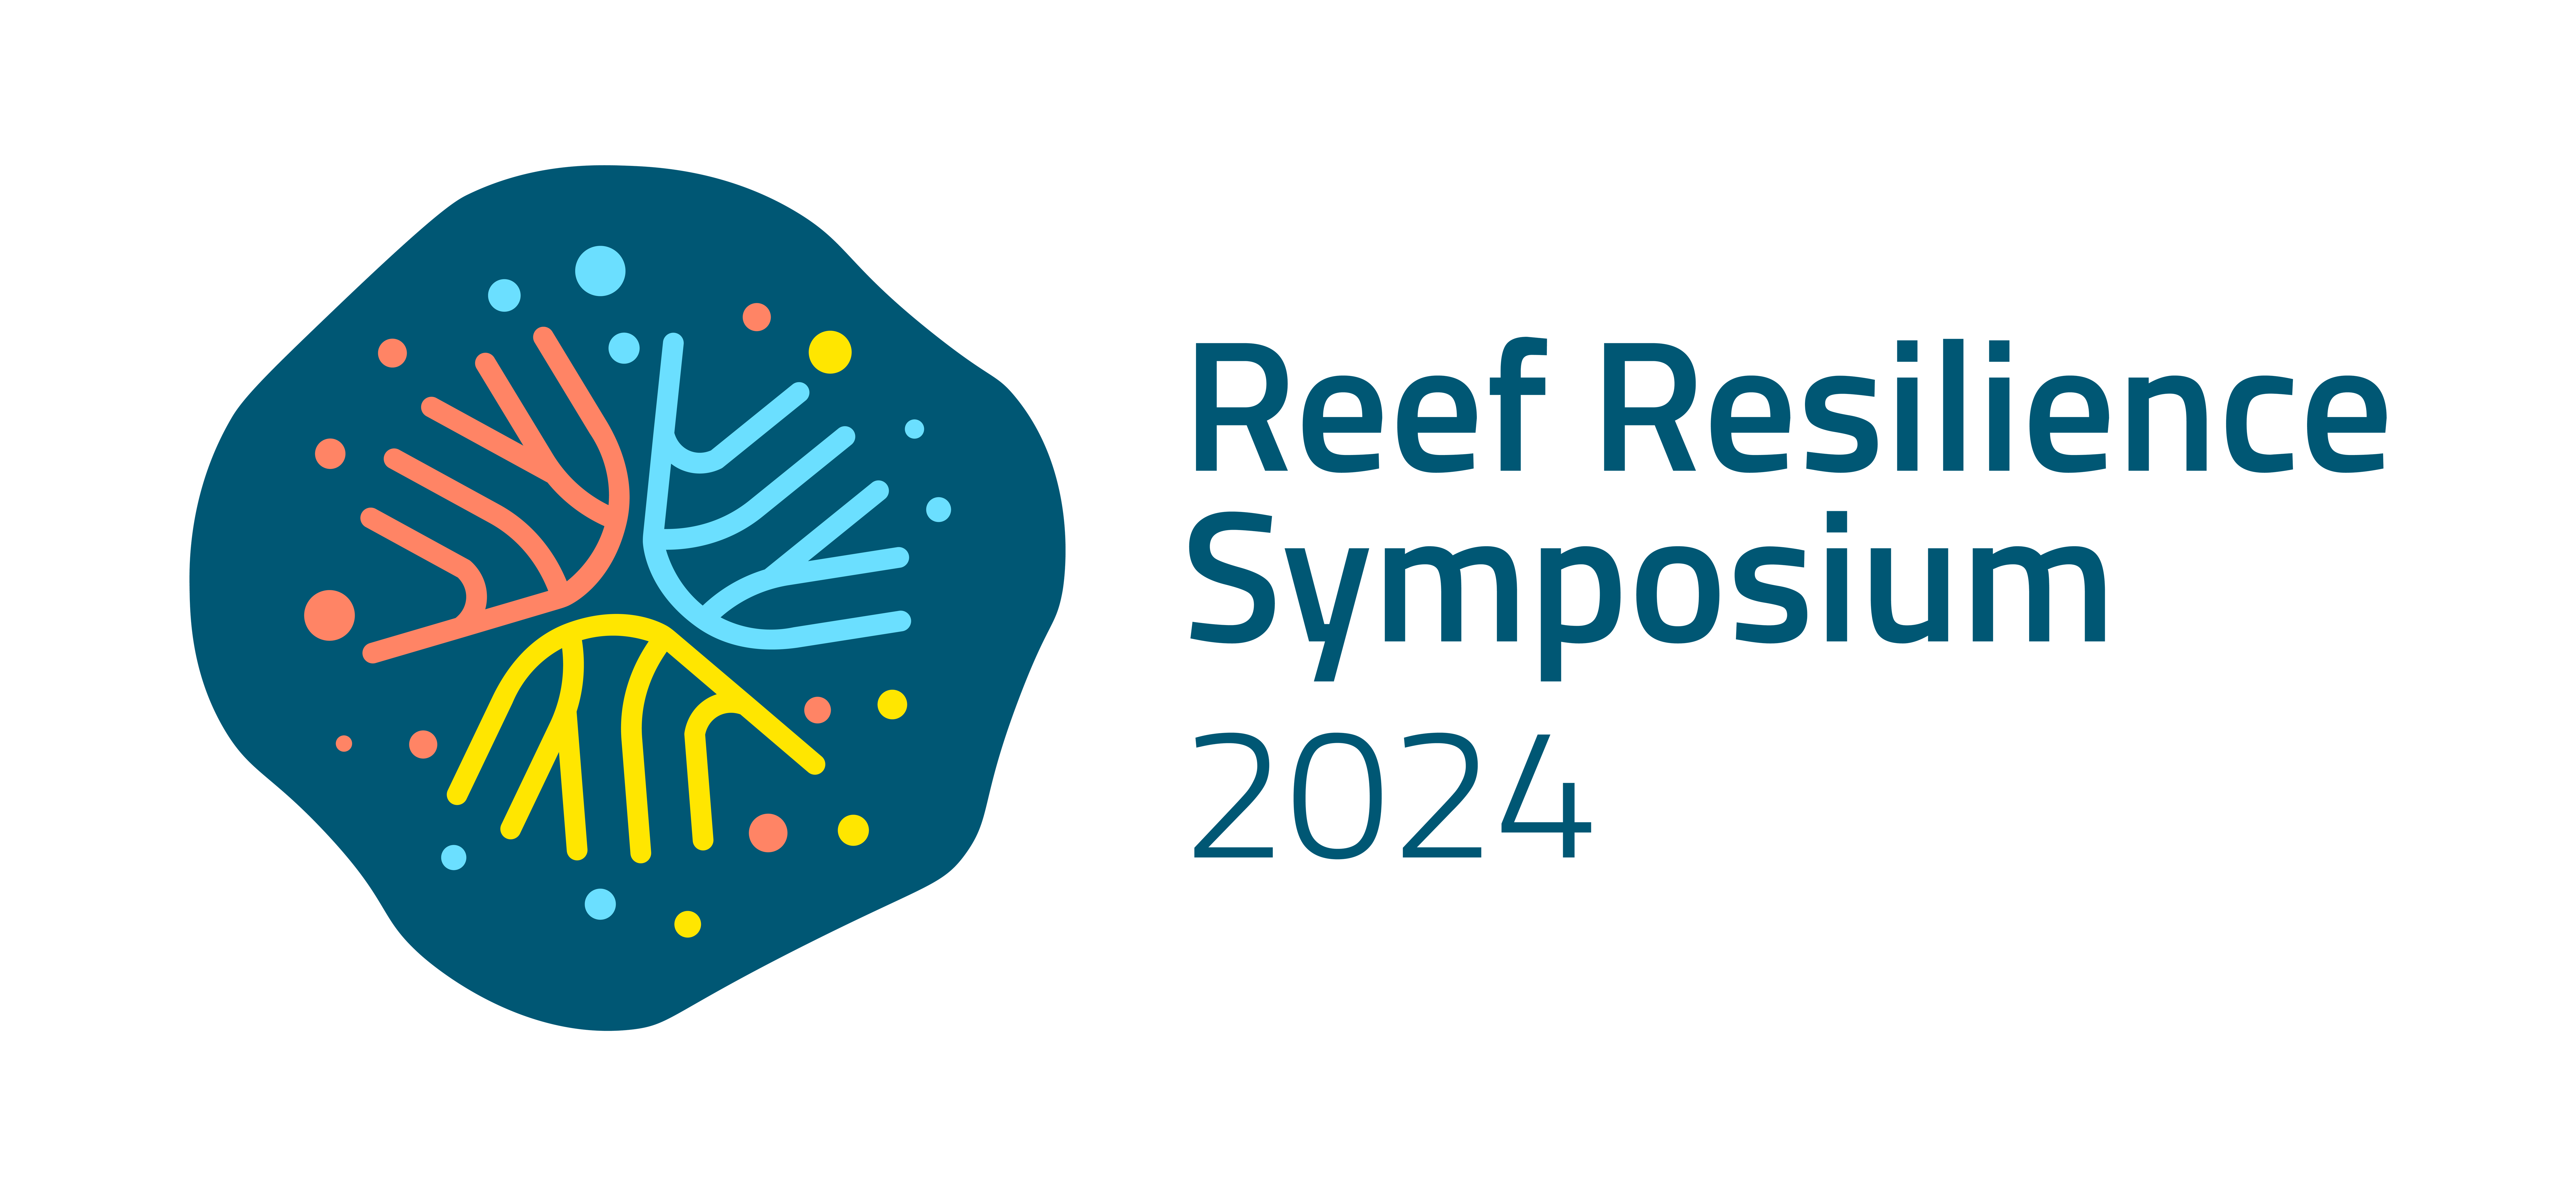 Reef Resilience Symposium logo-07 (1)